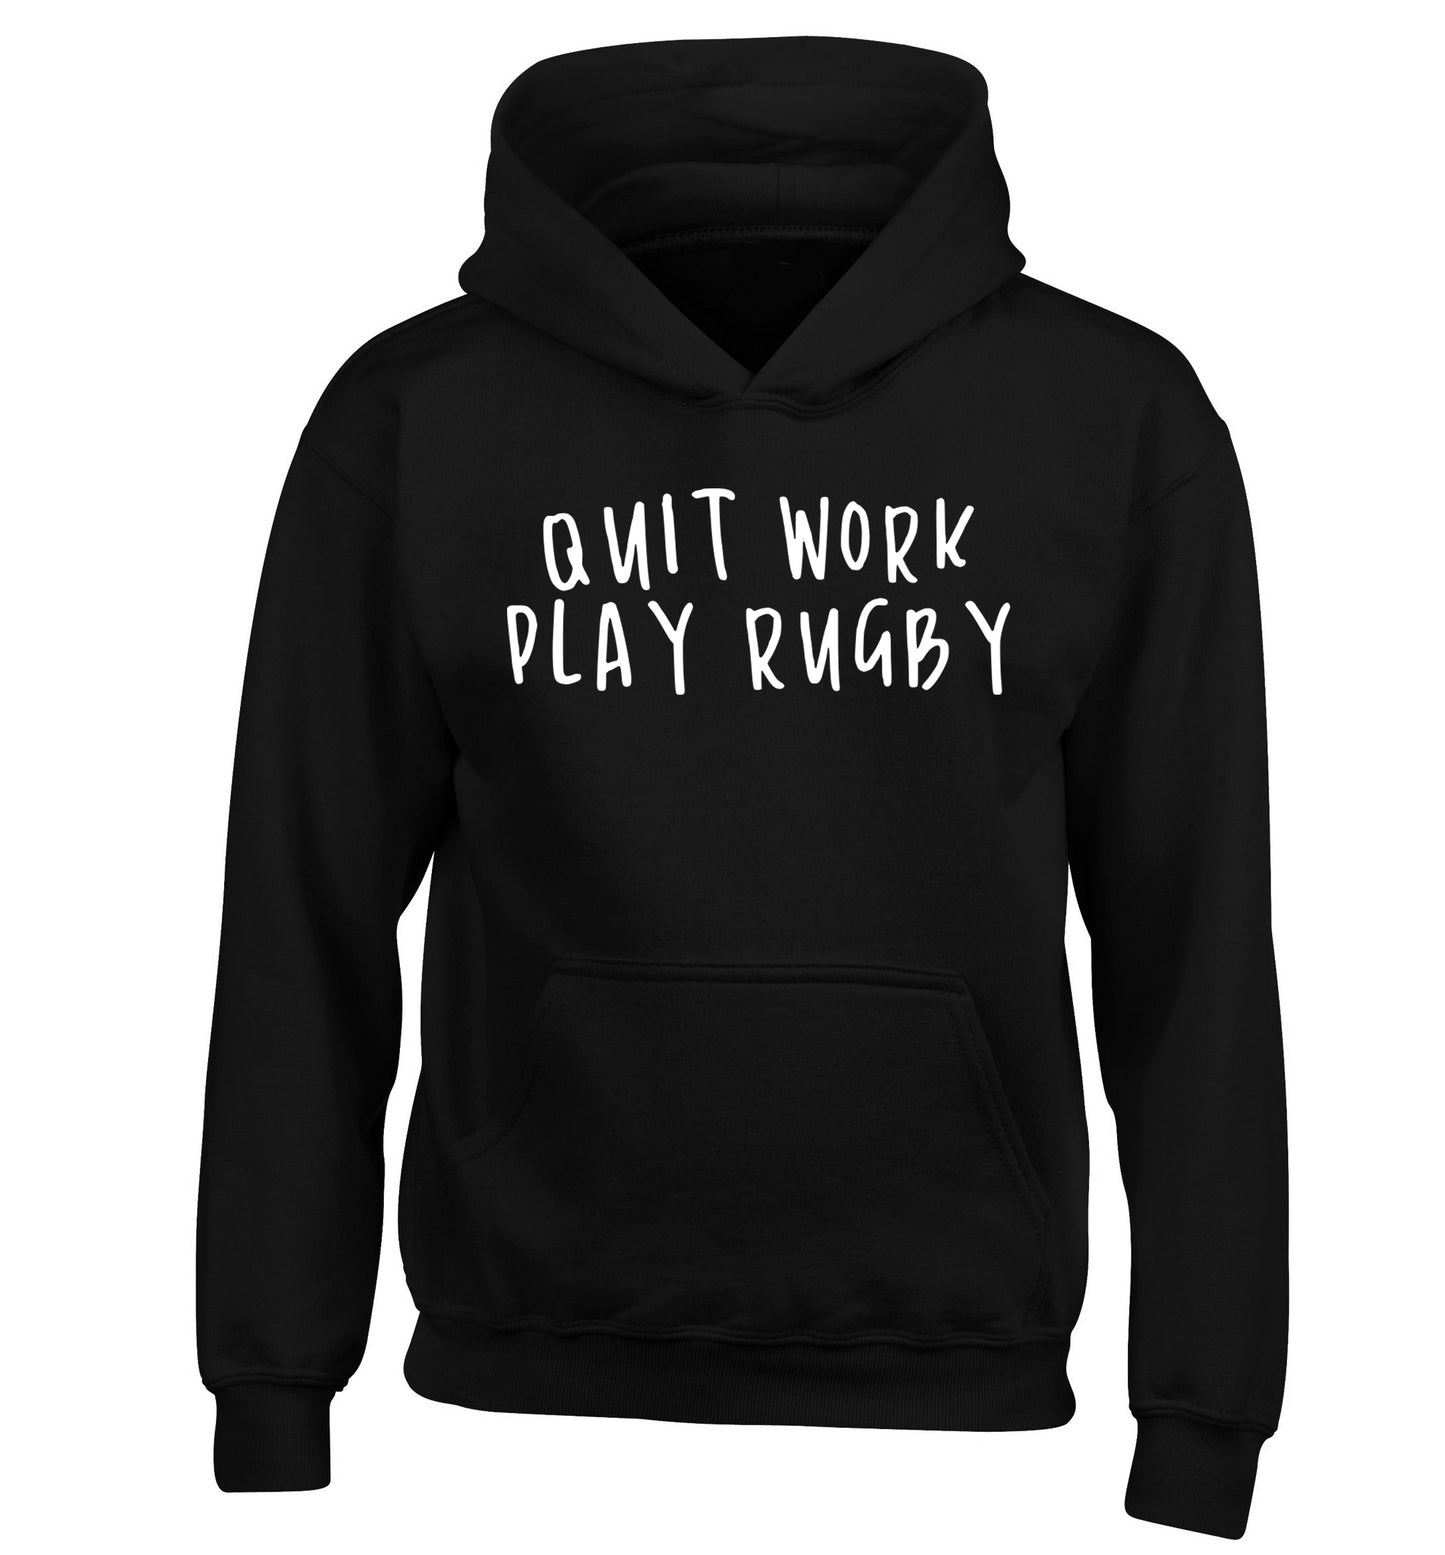 Quit work play rugby children's black hoodie 12-13 Years